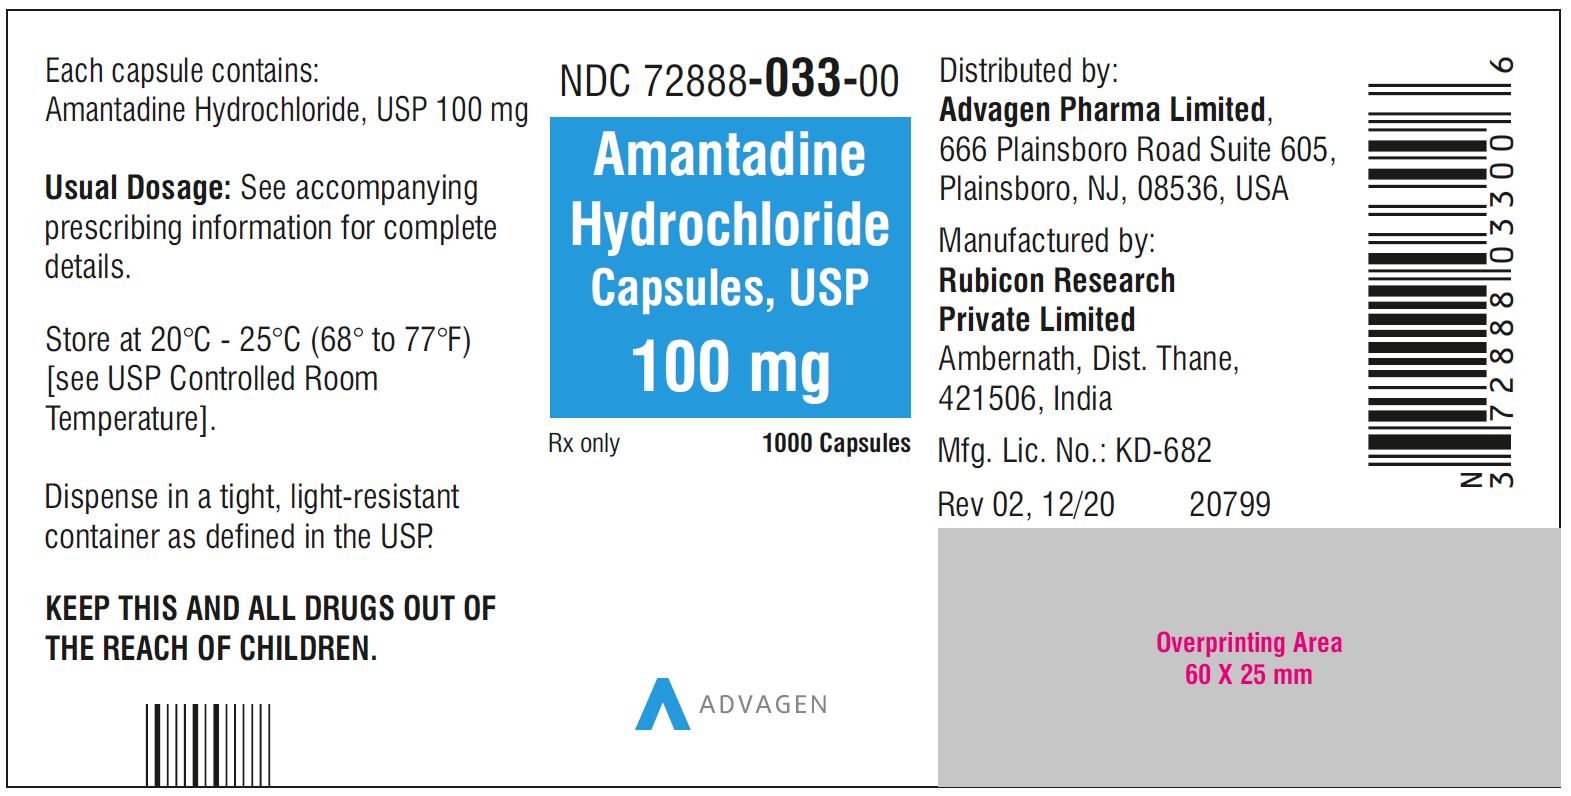 Amantadine Hydrochloride Cap, USP 100 mg - NDC-72888-033-00 - 1000 Capsules